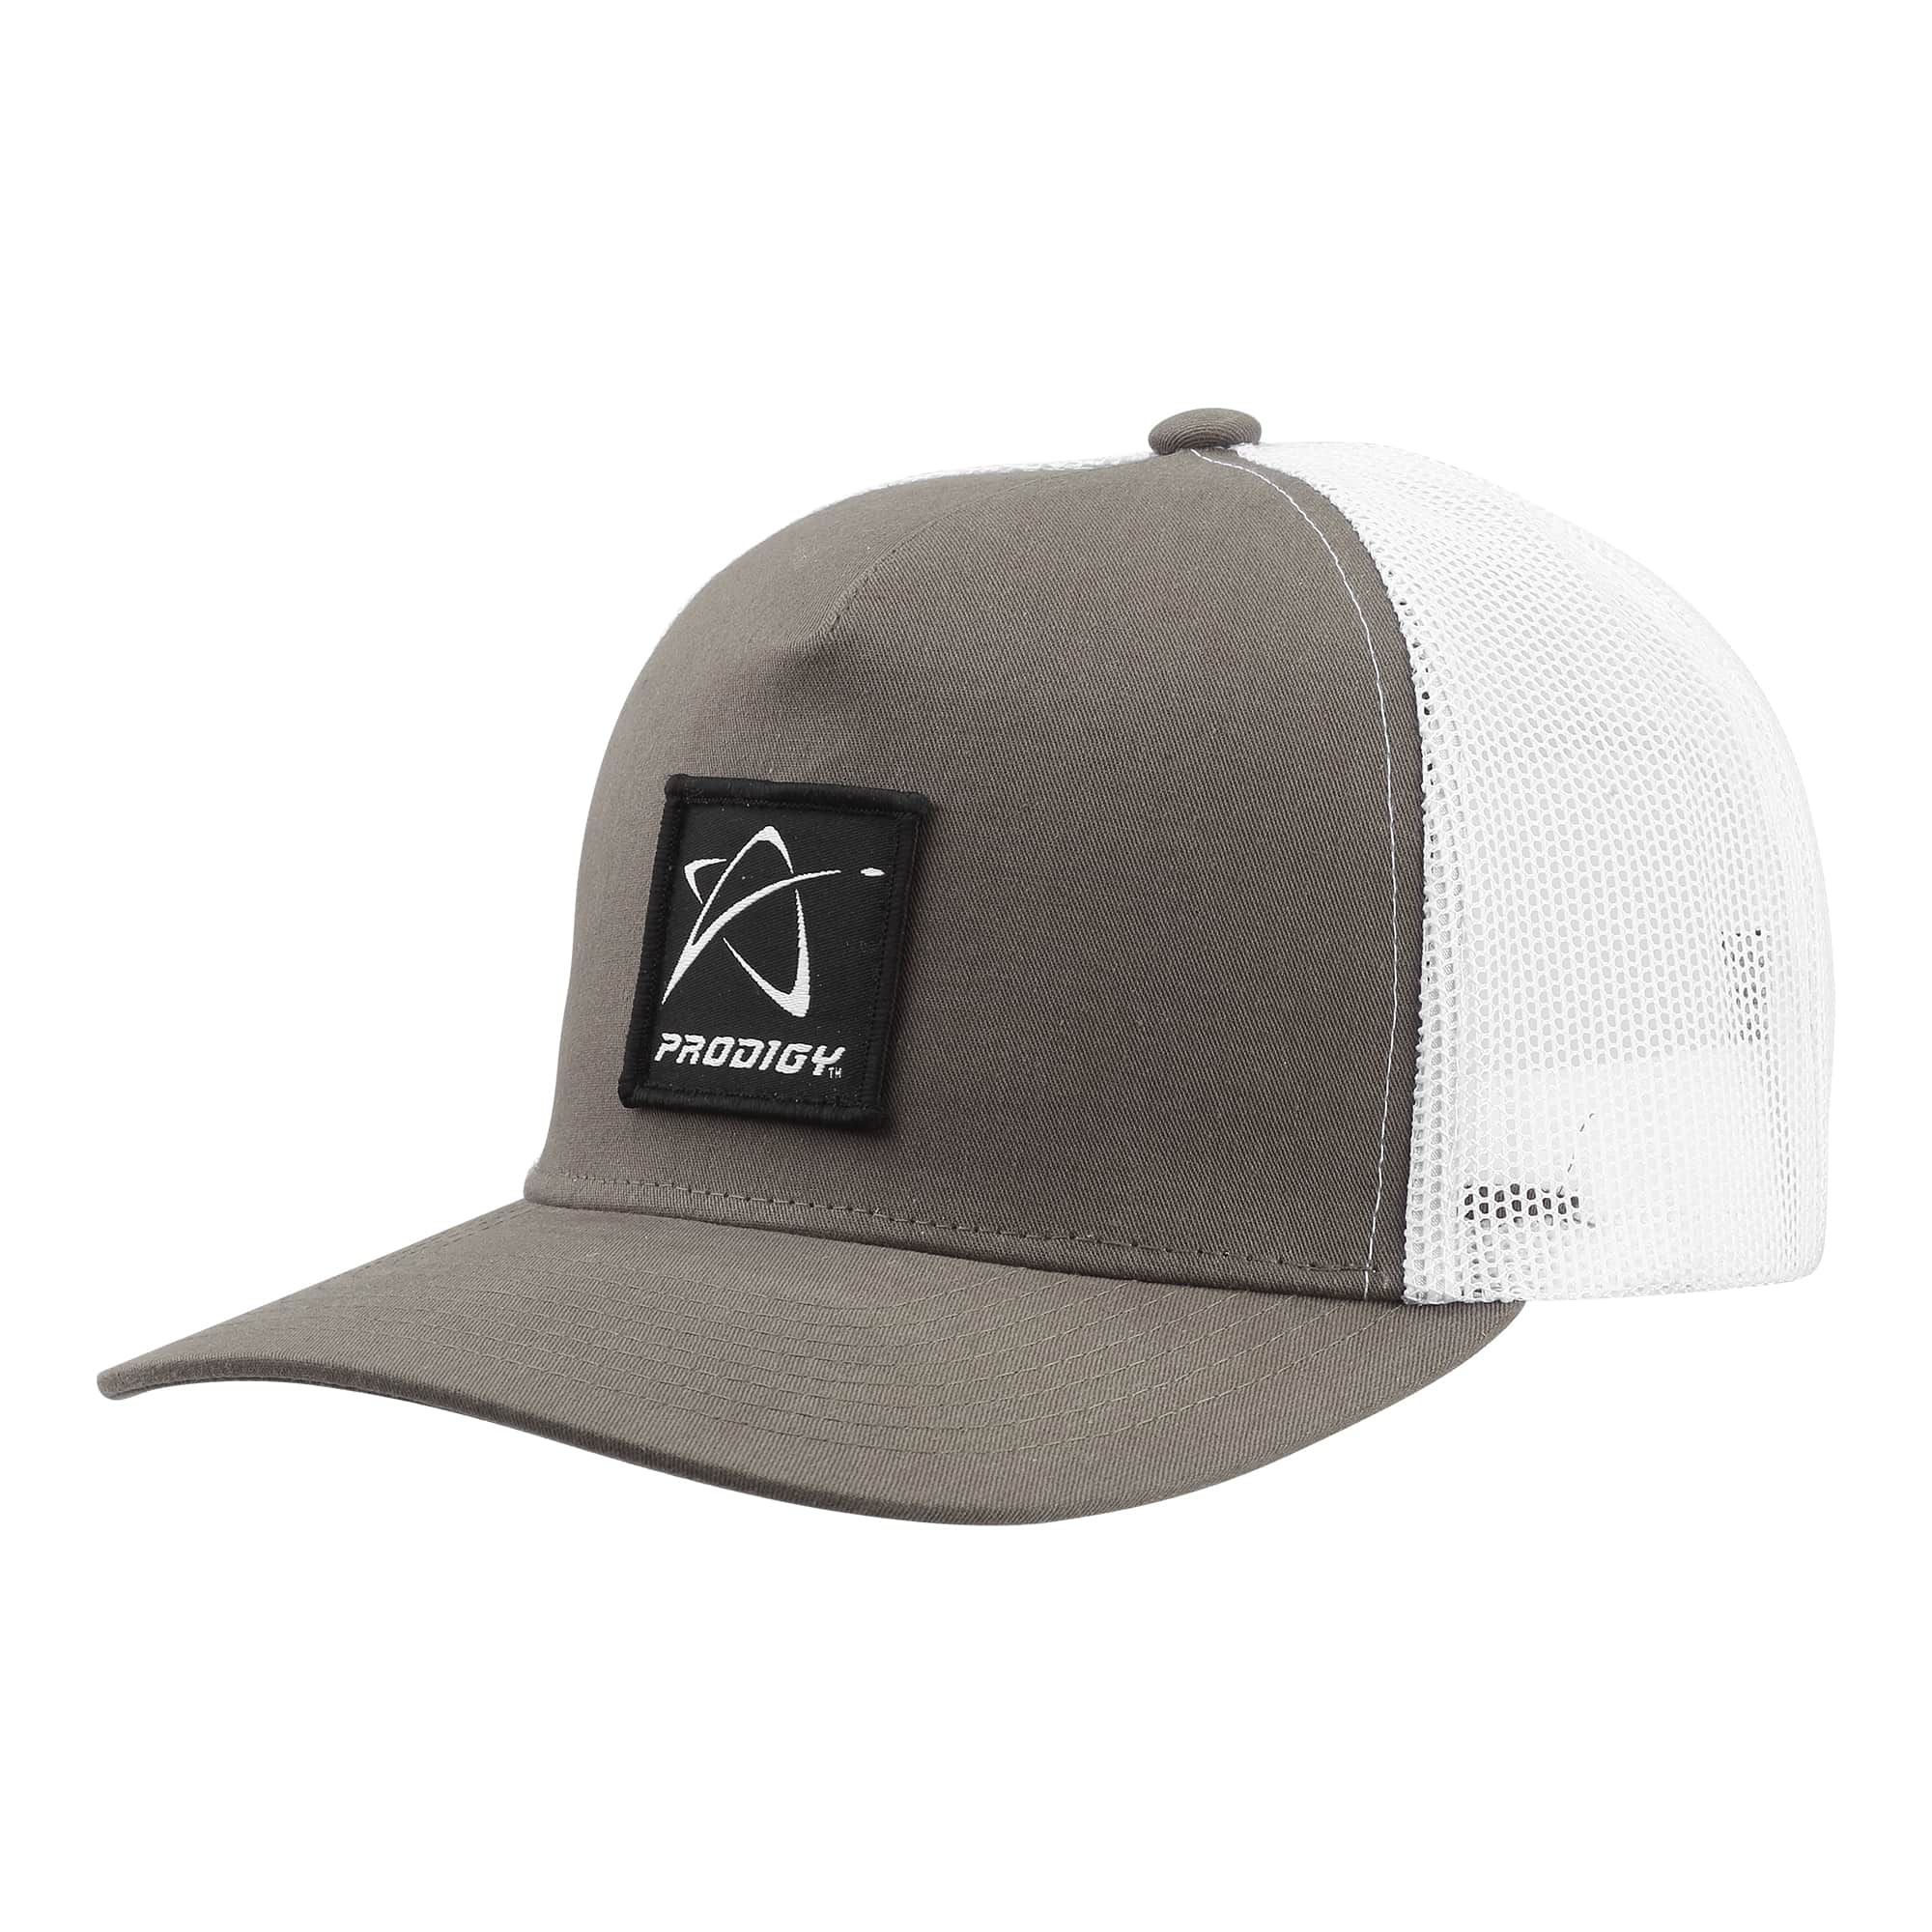 Prodigy Trucker Cap Hat Logo Patch - Grey/White